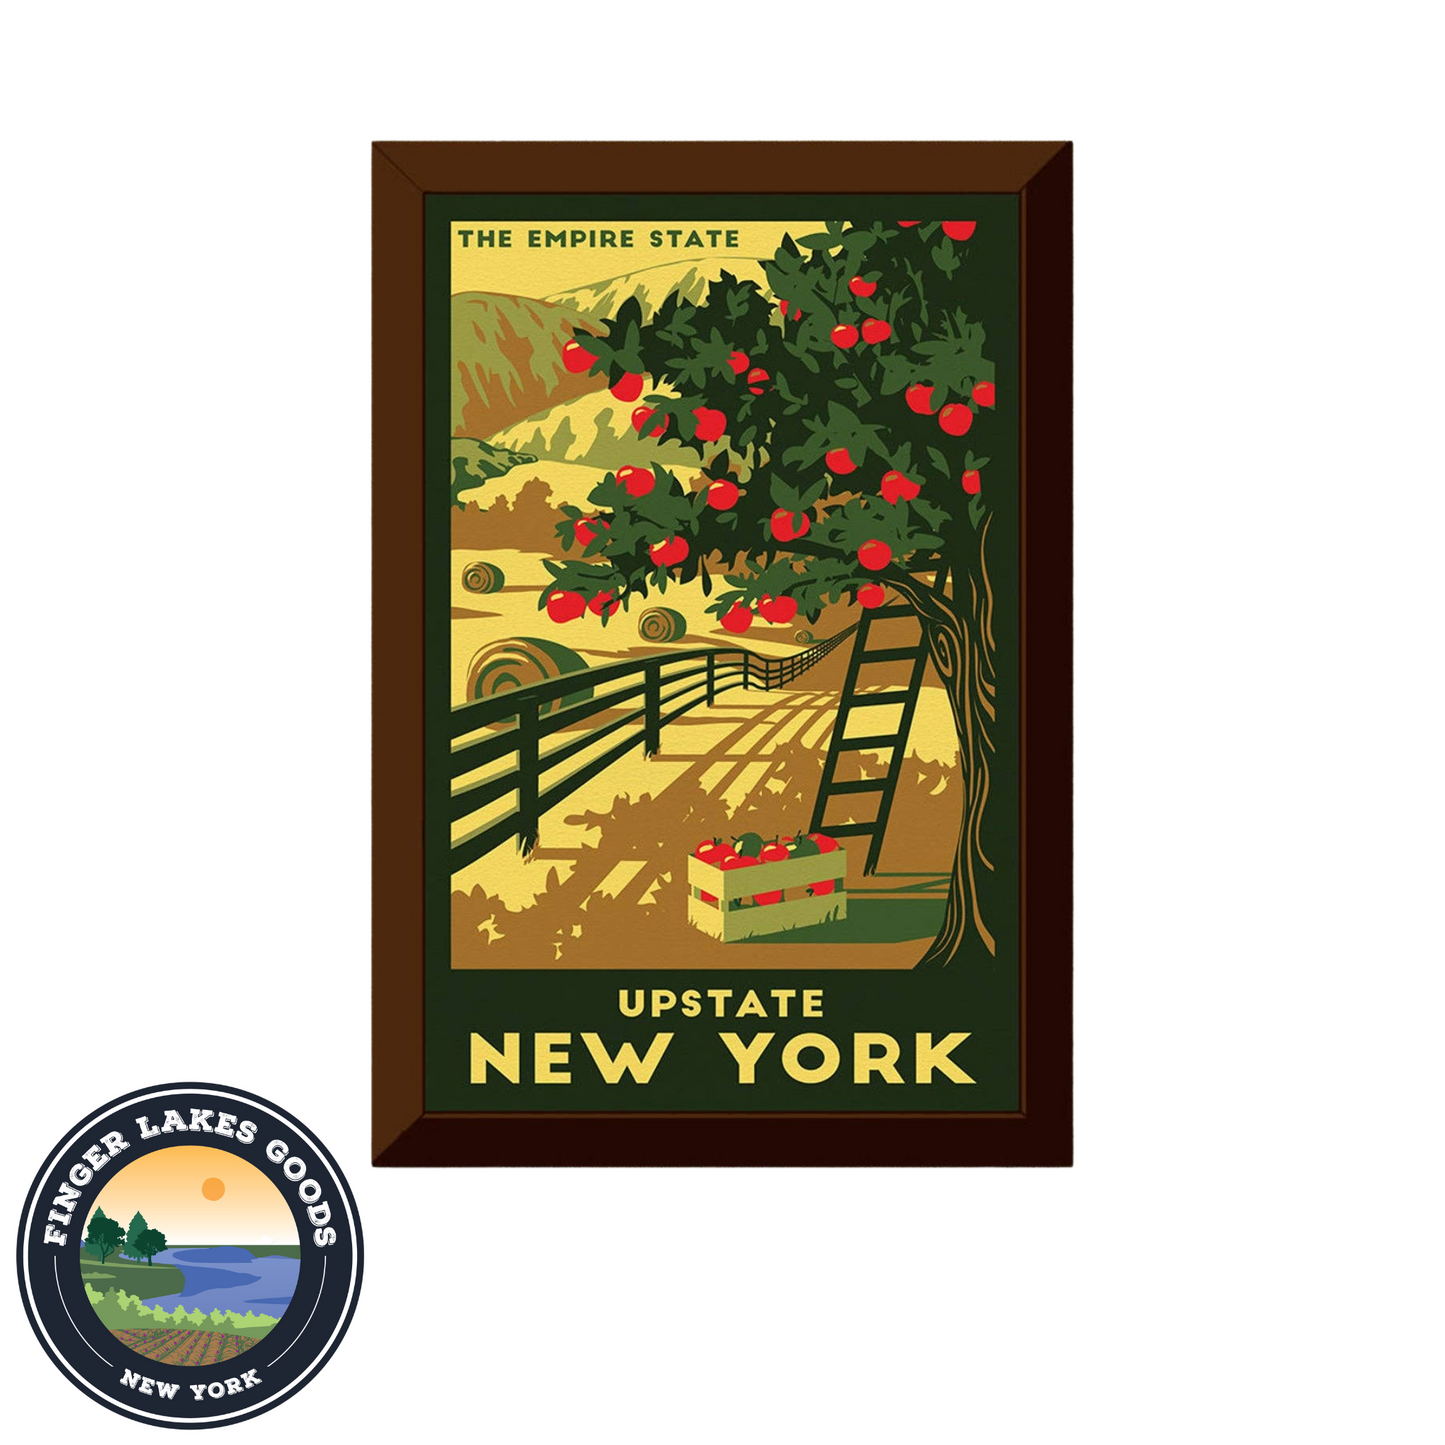 Upstate New York Vintage Travel Poster